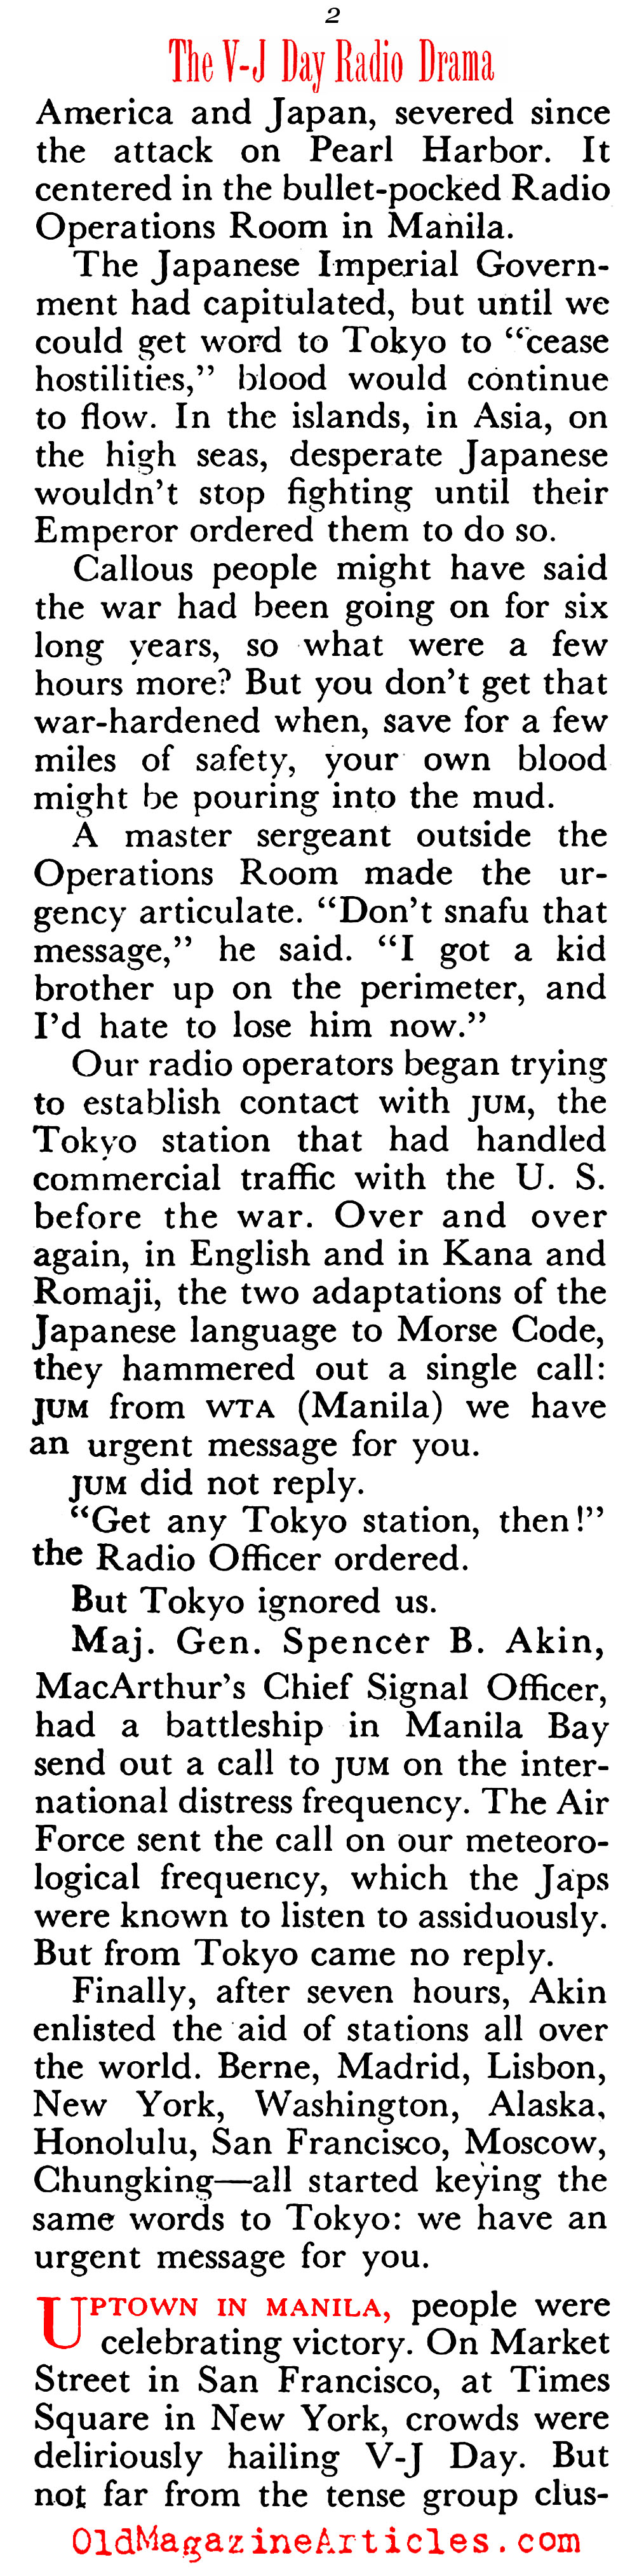 A Failure to Spread the Word (Coronet Magazine, 1951)